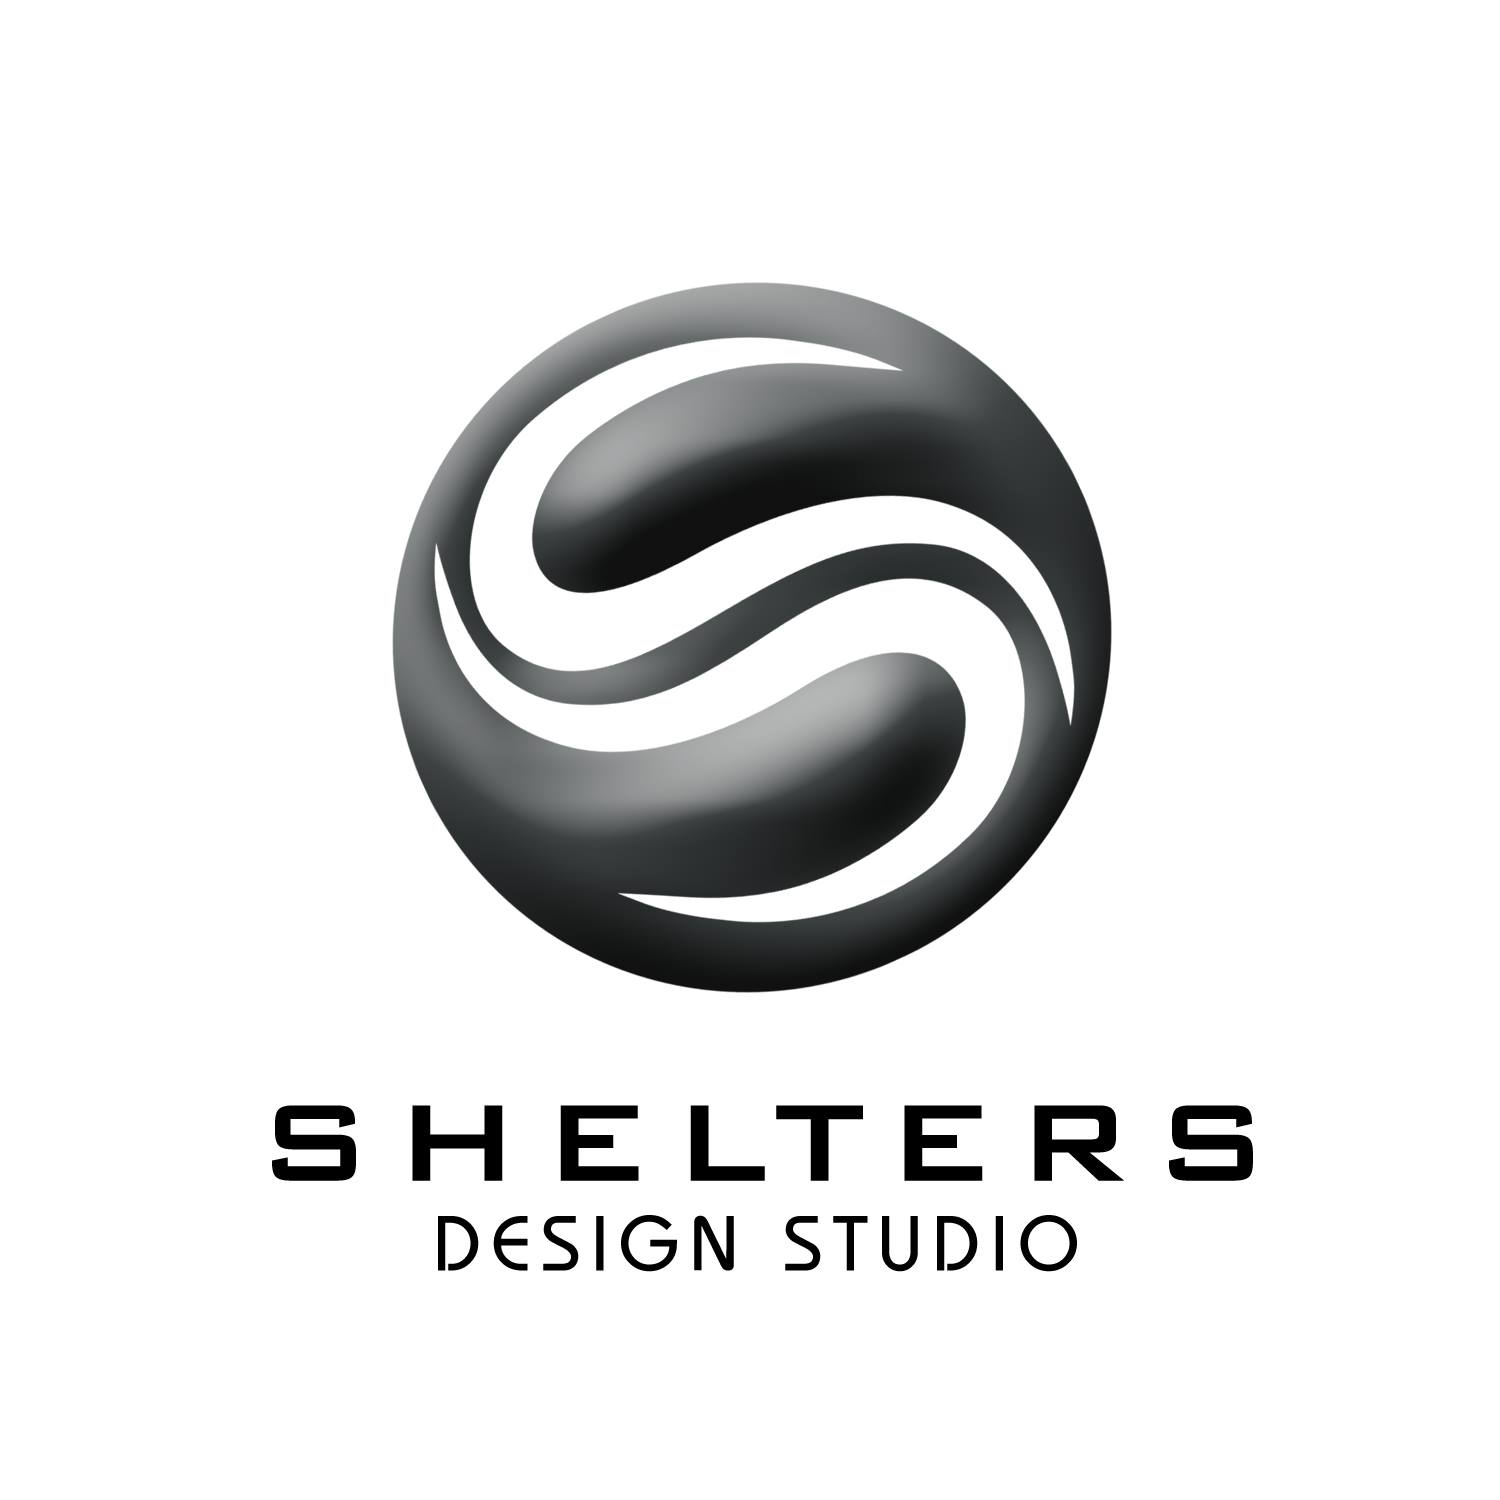 Shelters Design Studio|IT Services|Professional Services